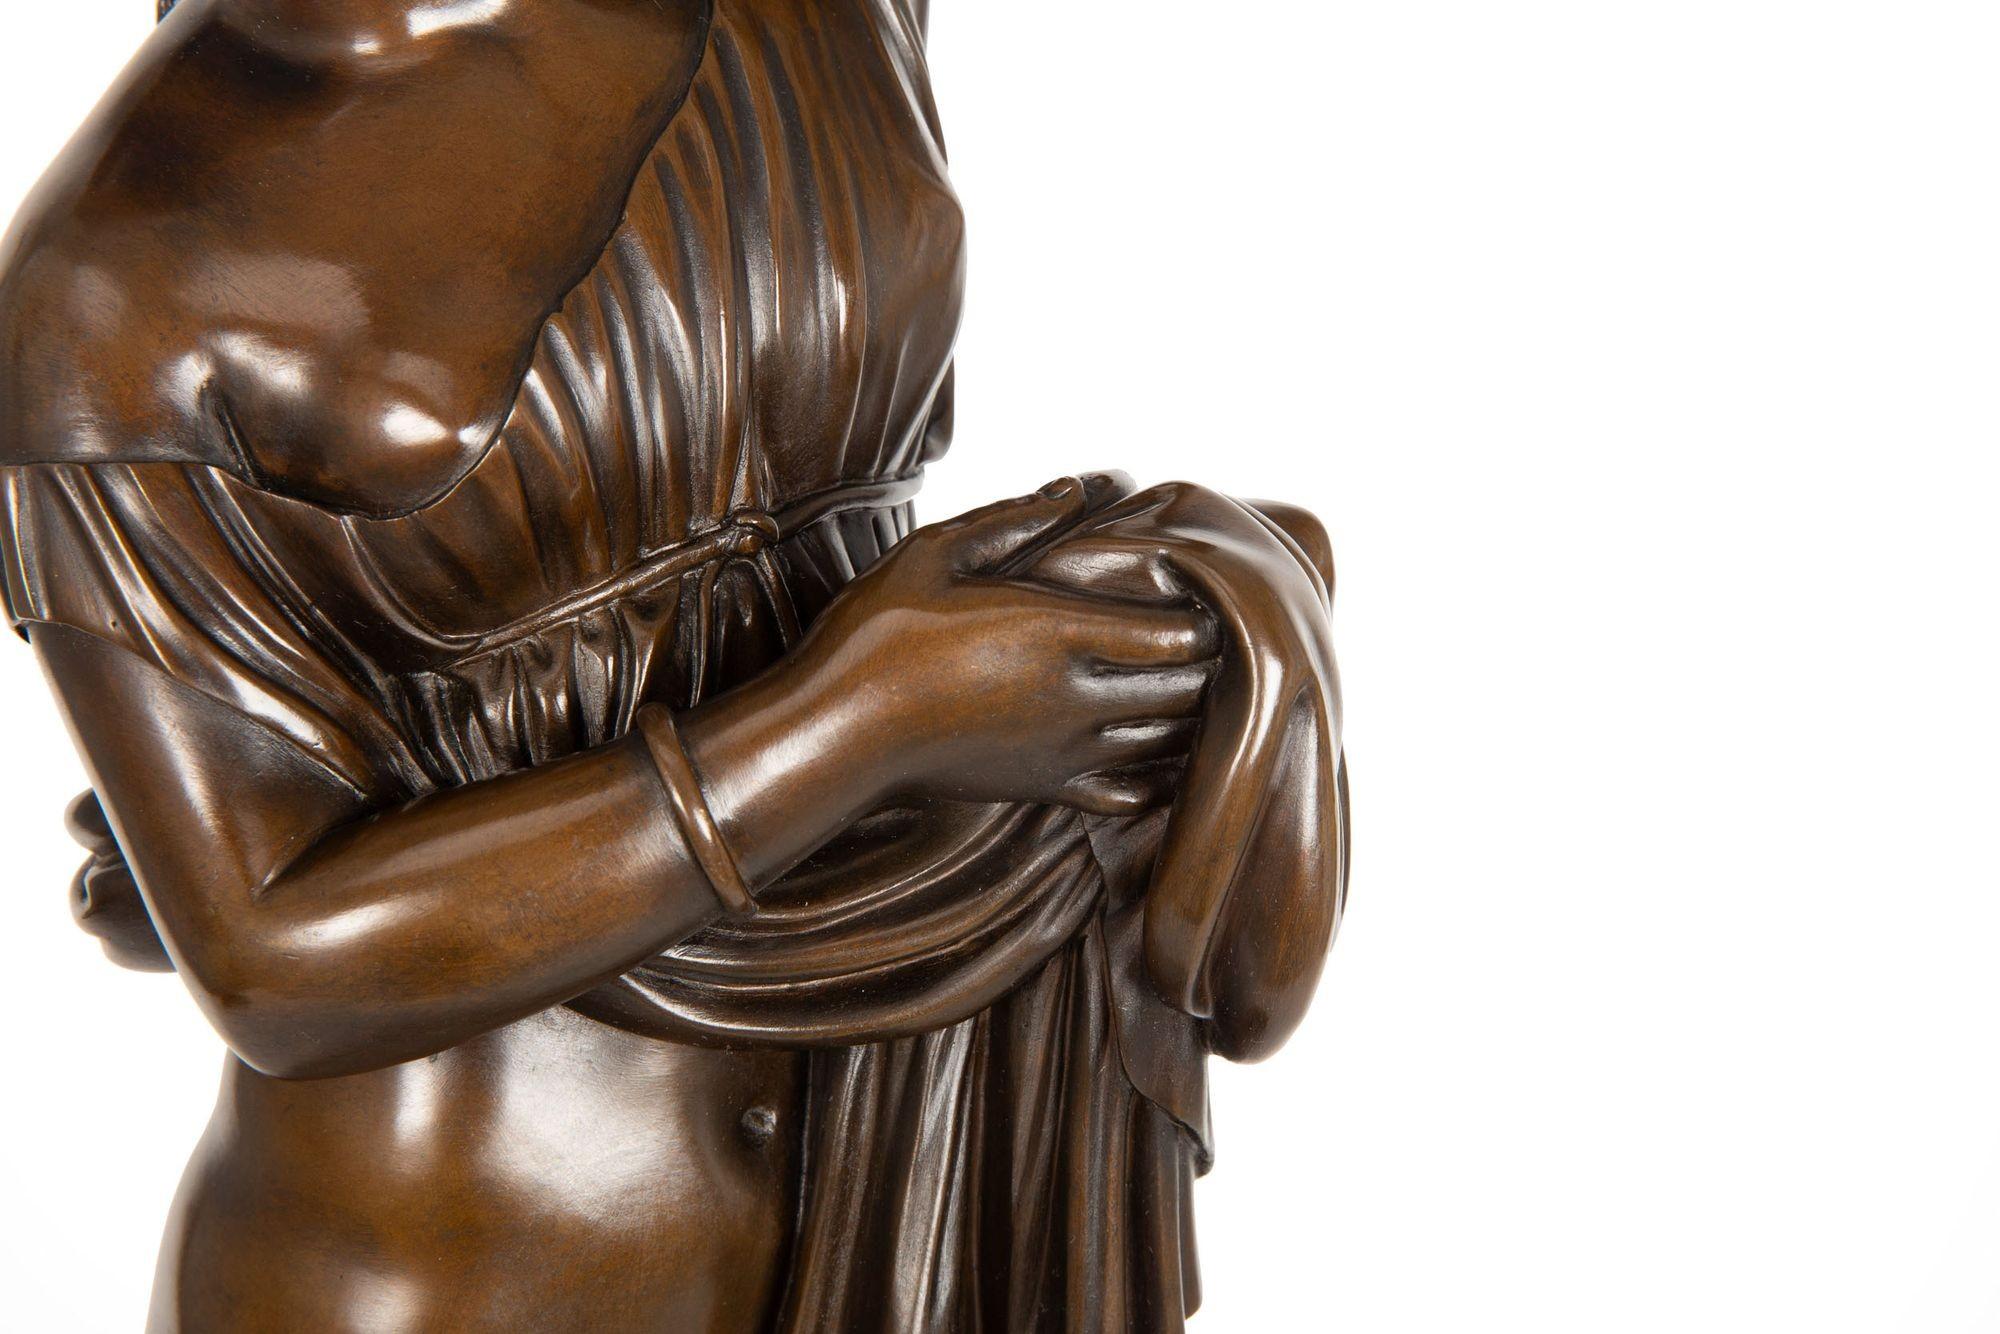 19th Century Grand Tour Bronze Sculpture “Callipygian Venus” of Antiquity For Sale 14